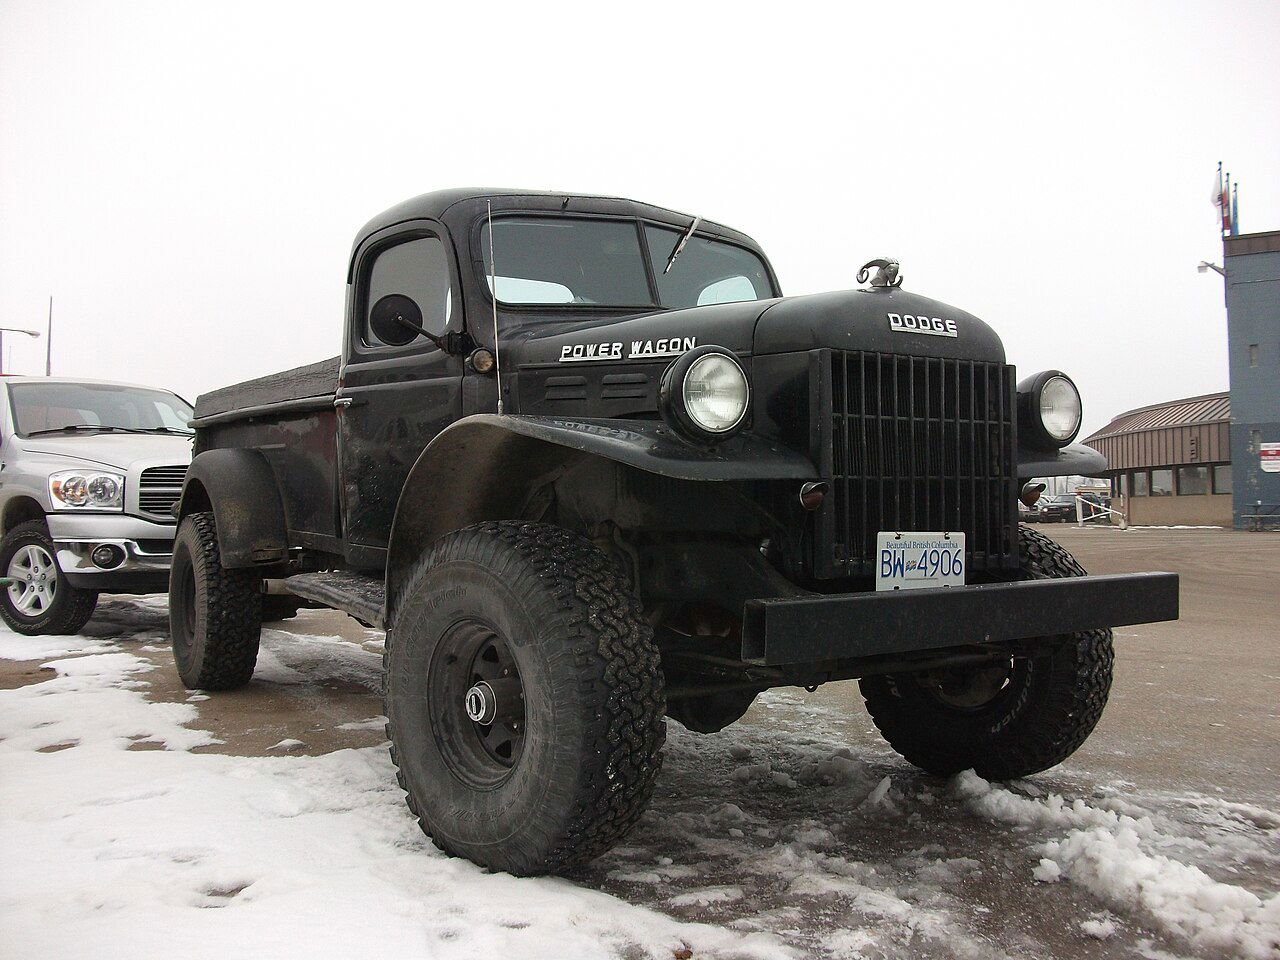 Toughest pickup trucks ever made - Dodge_Power_Wagon_WM-300 dave_7 via Wikimedia.